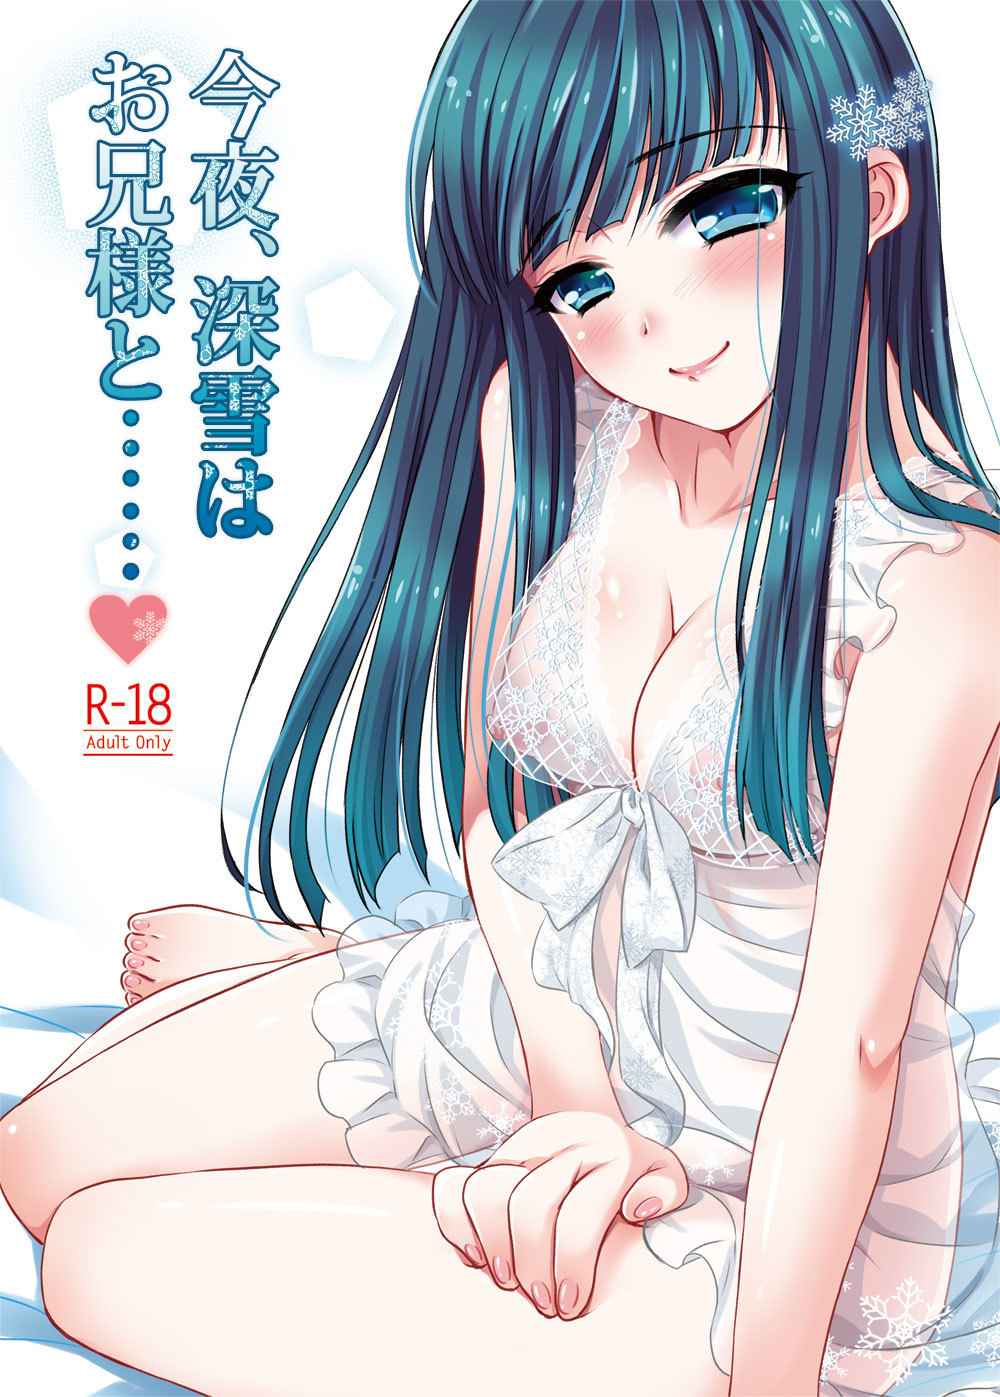 Anime porn miyuki shiba comics